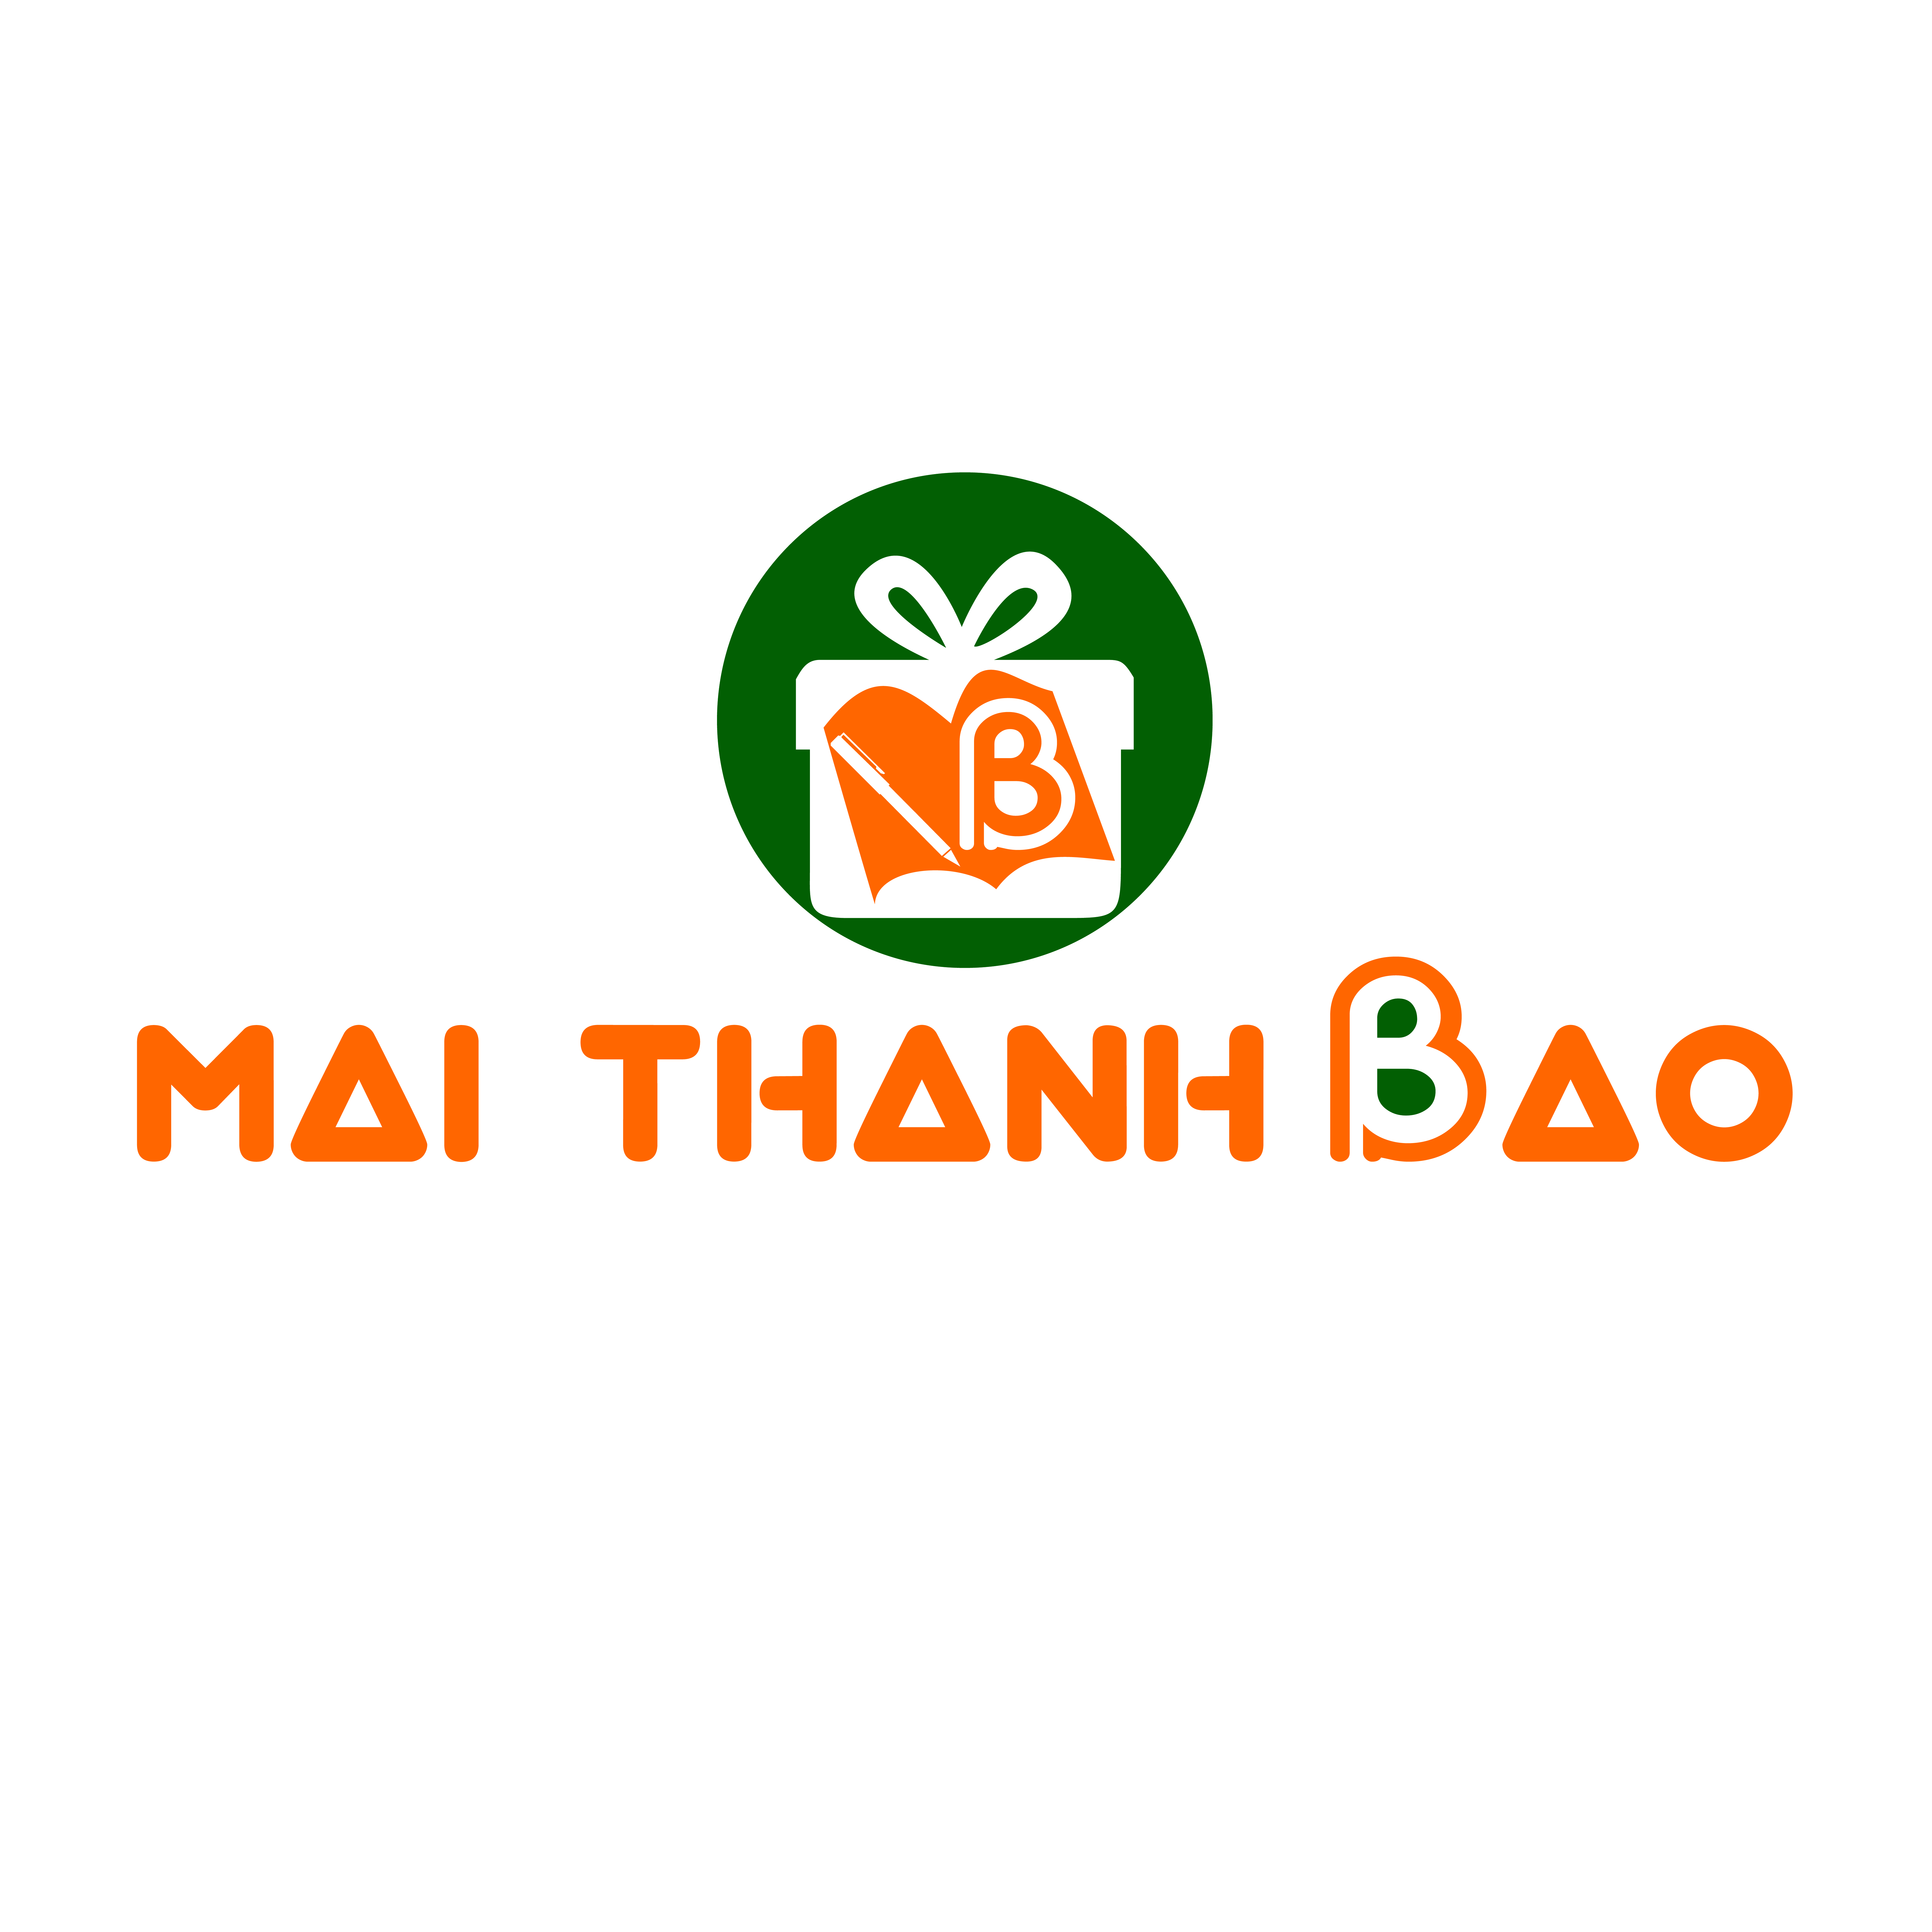 MAI THANH BAO